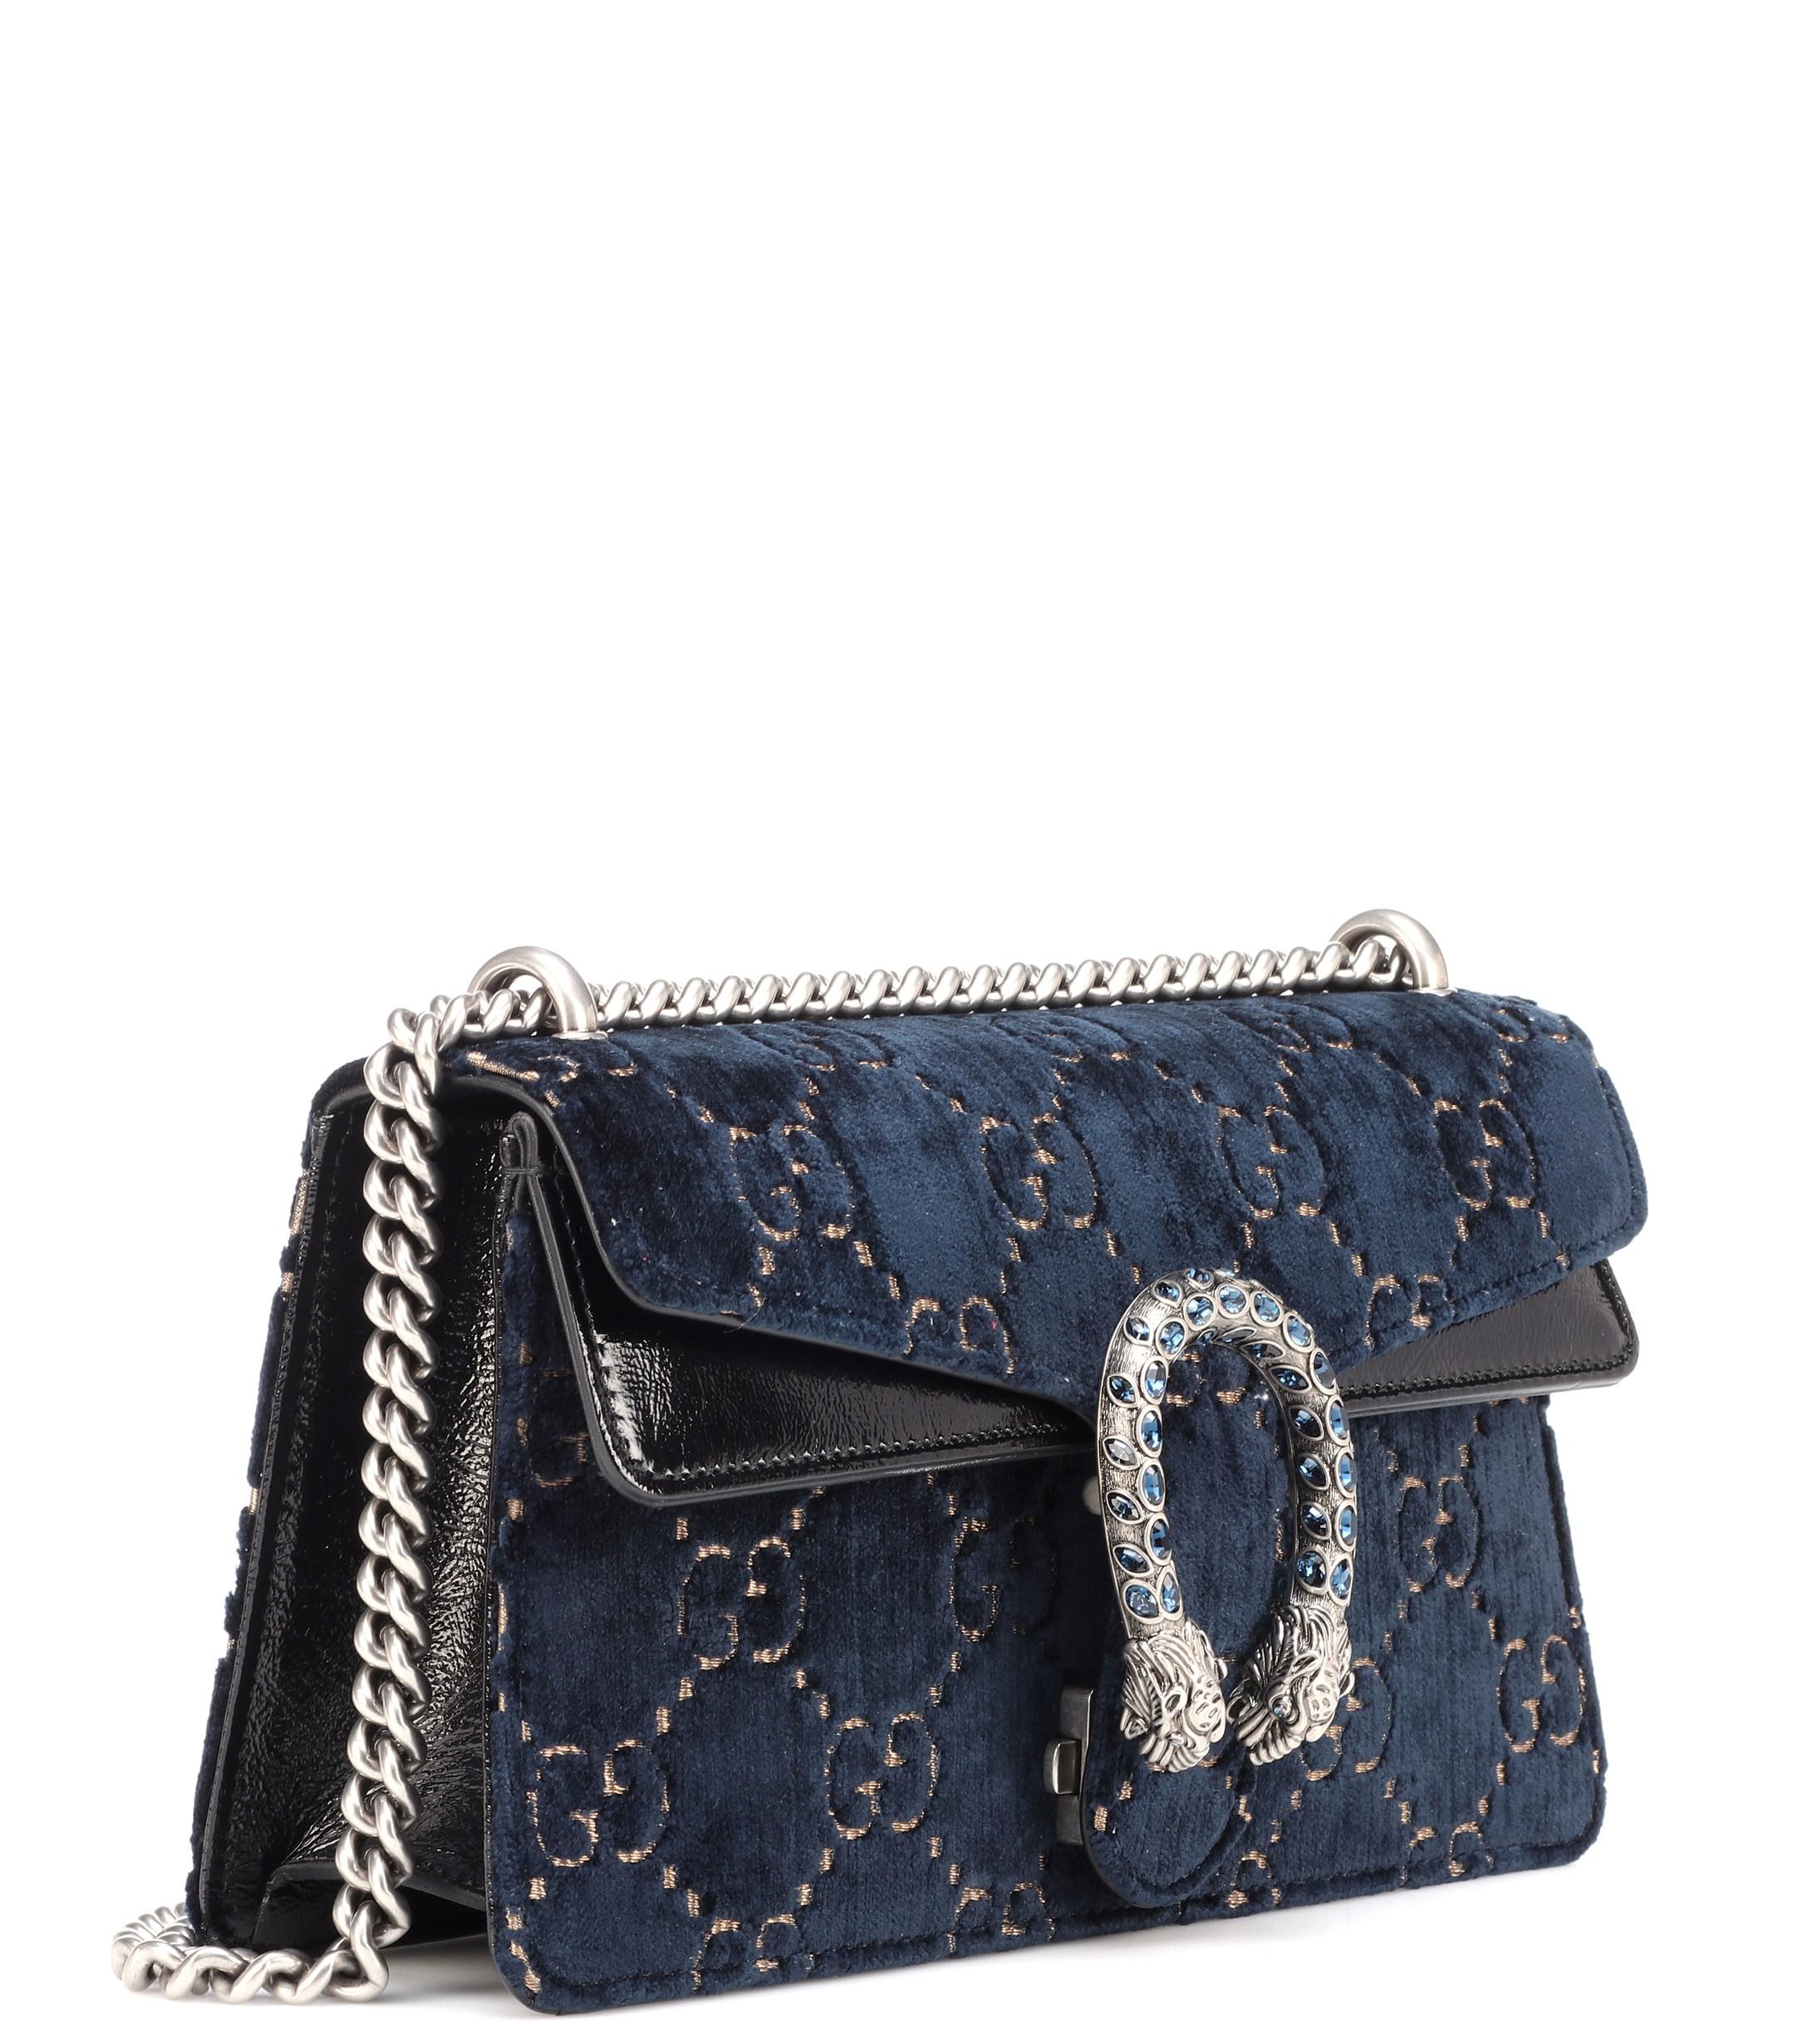 Gucci Dionysus Gg Small Velvet & Leather Shoulder Bag in Navy Blue (Blue) Lyst